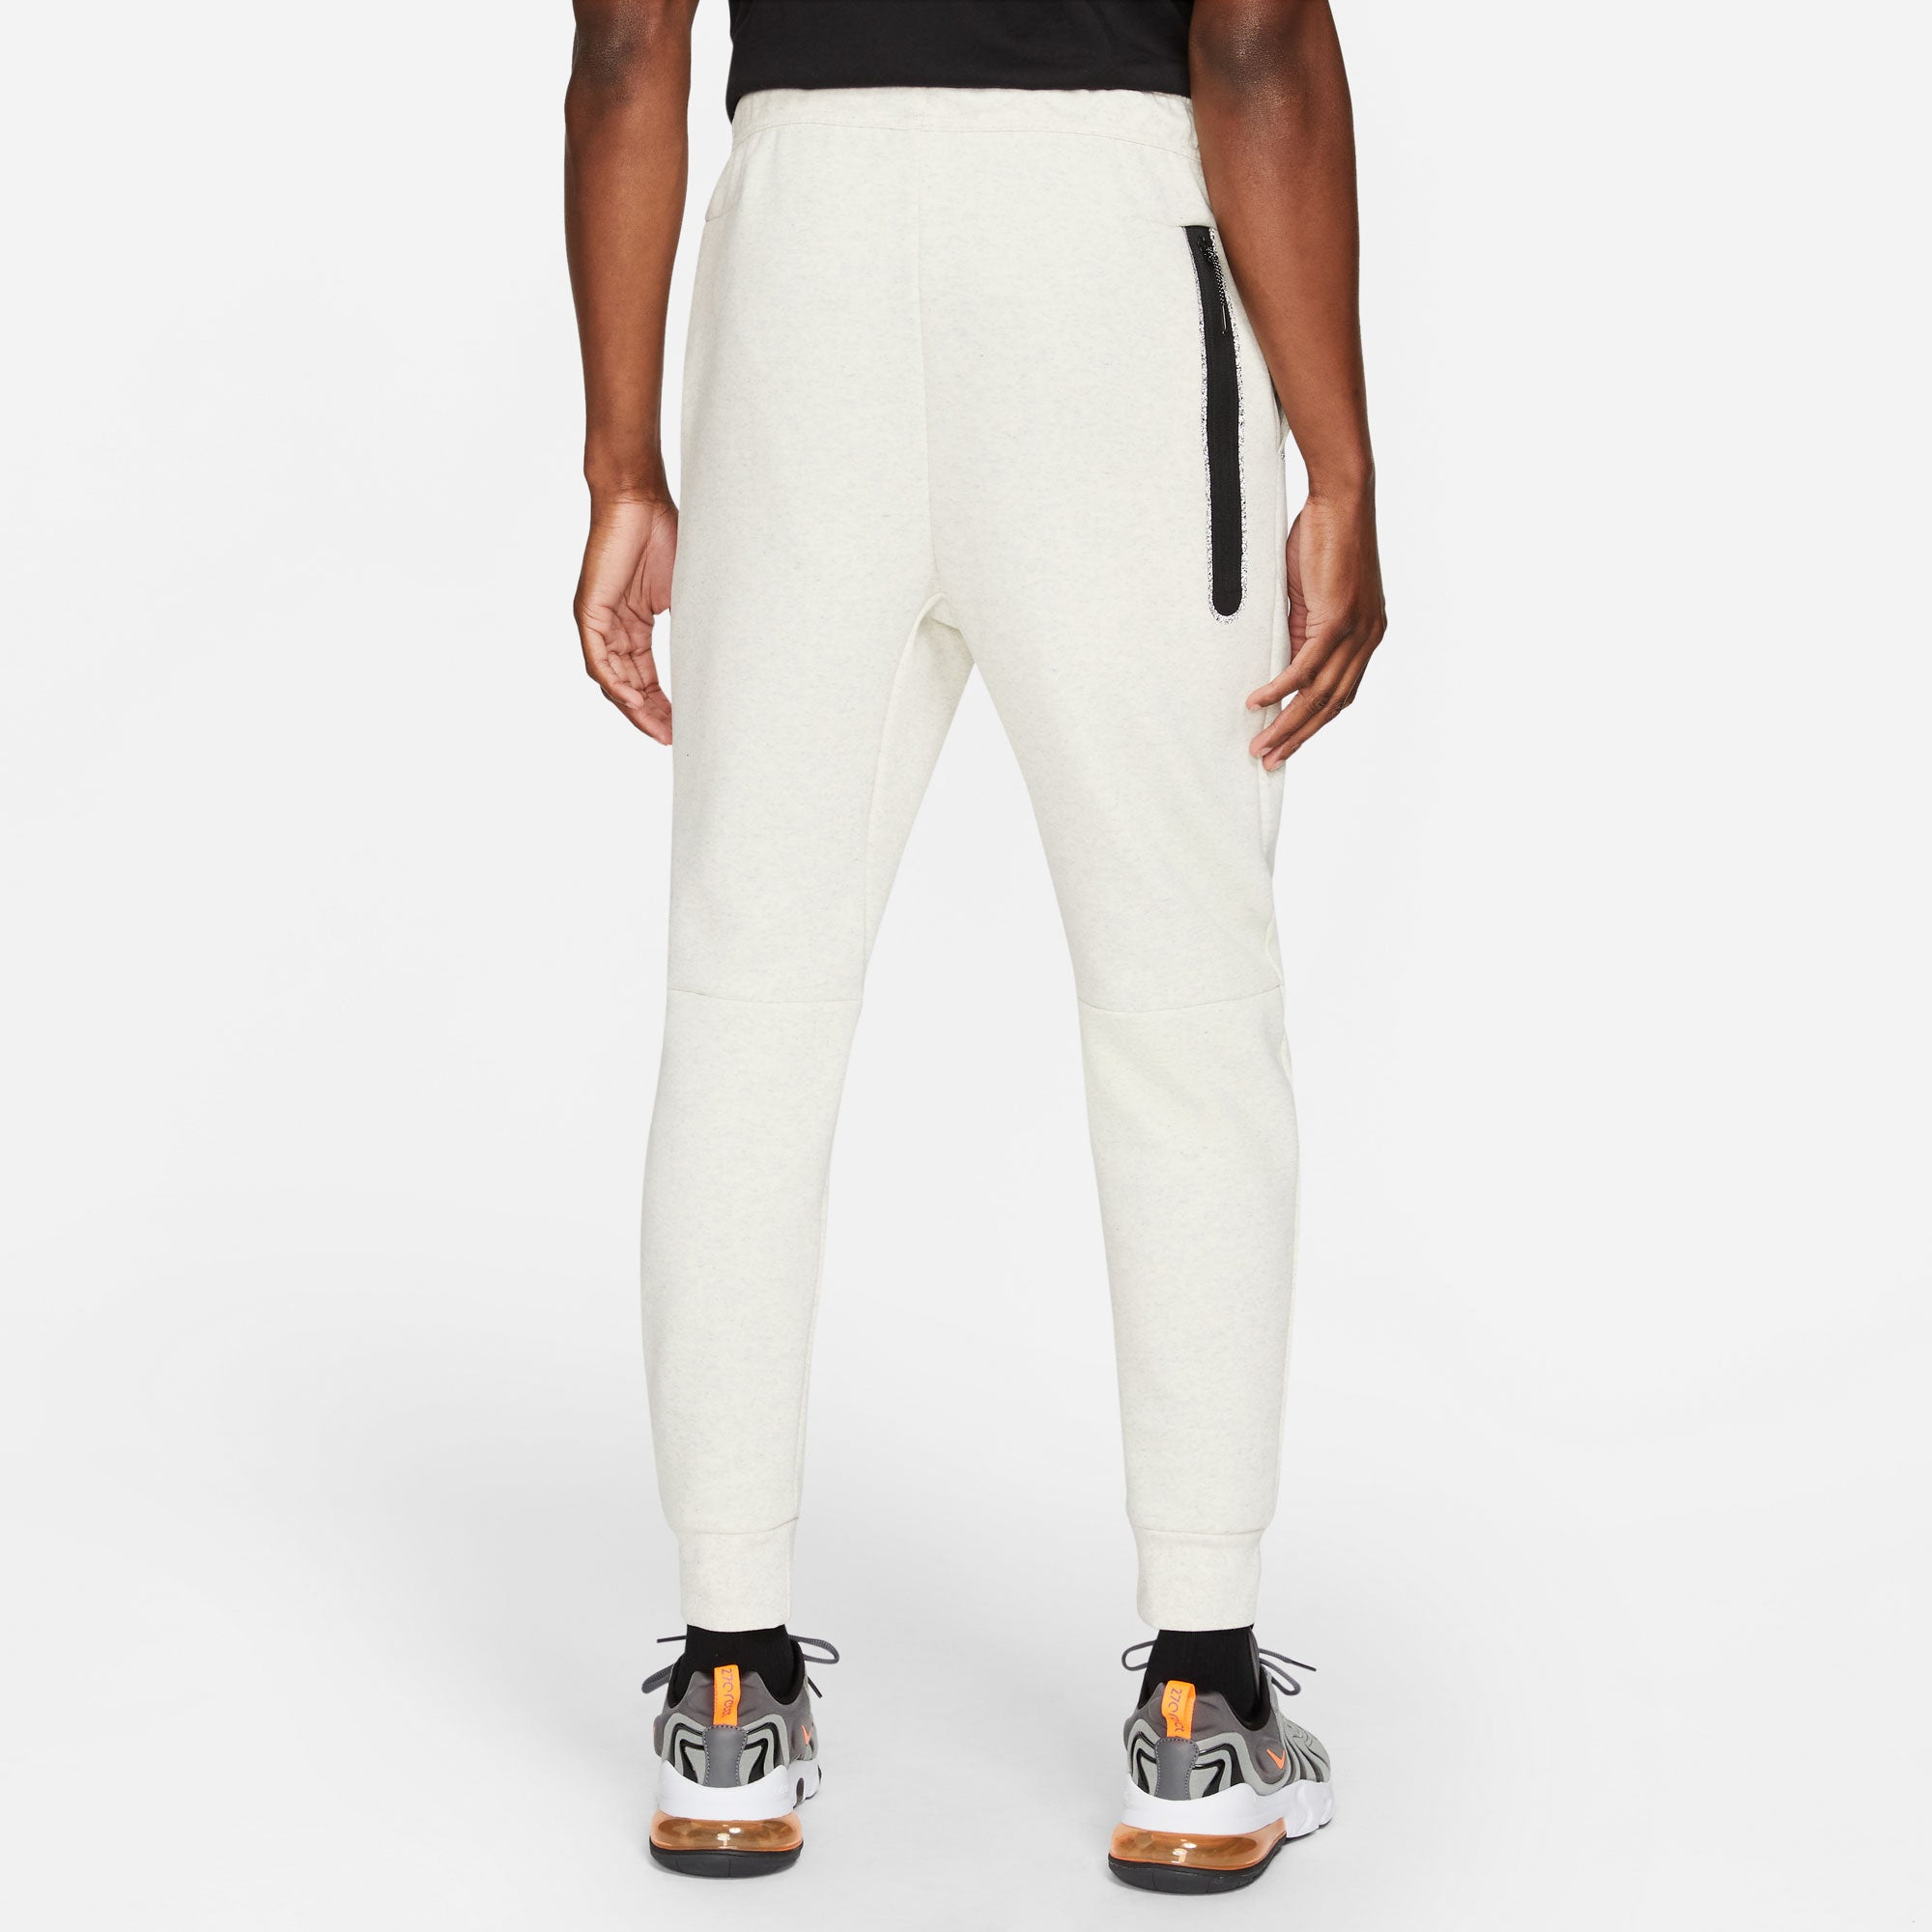 Nike Tech Fleece Revival Men's Pants White (2)